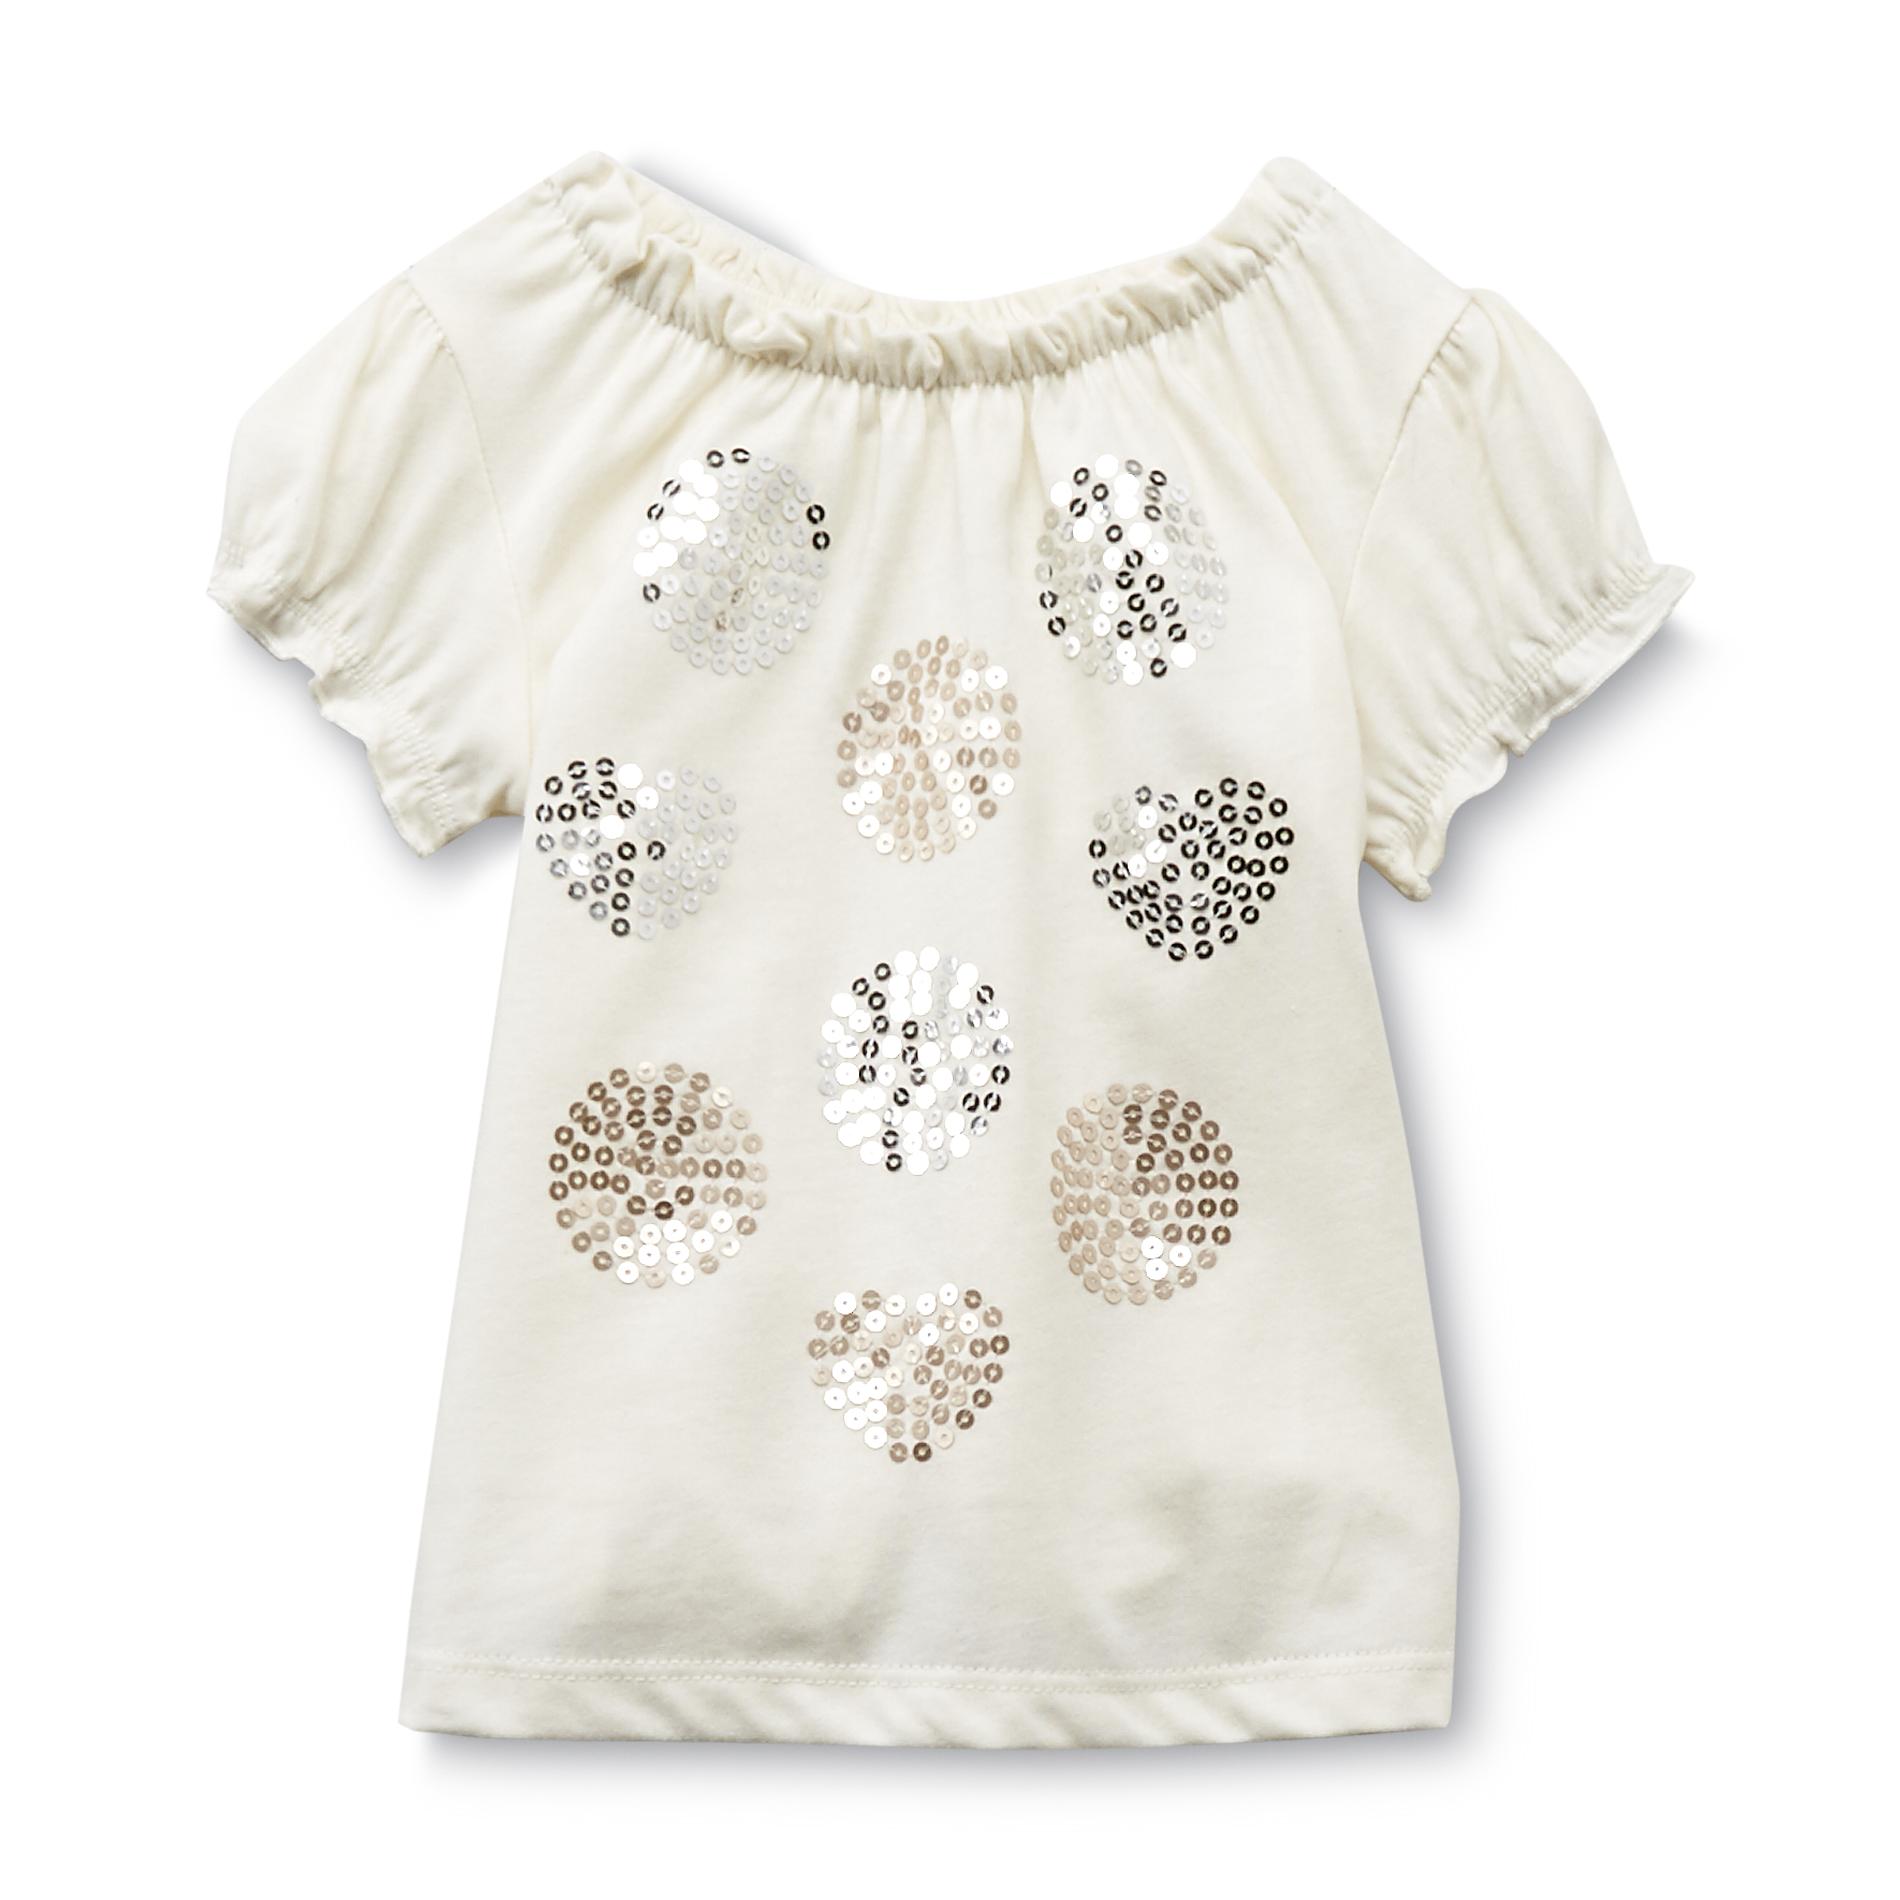 WonderKids Infant & Toddler Girl's Short-Sleeve Sequined Top